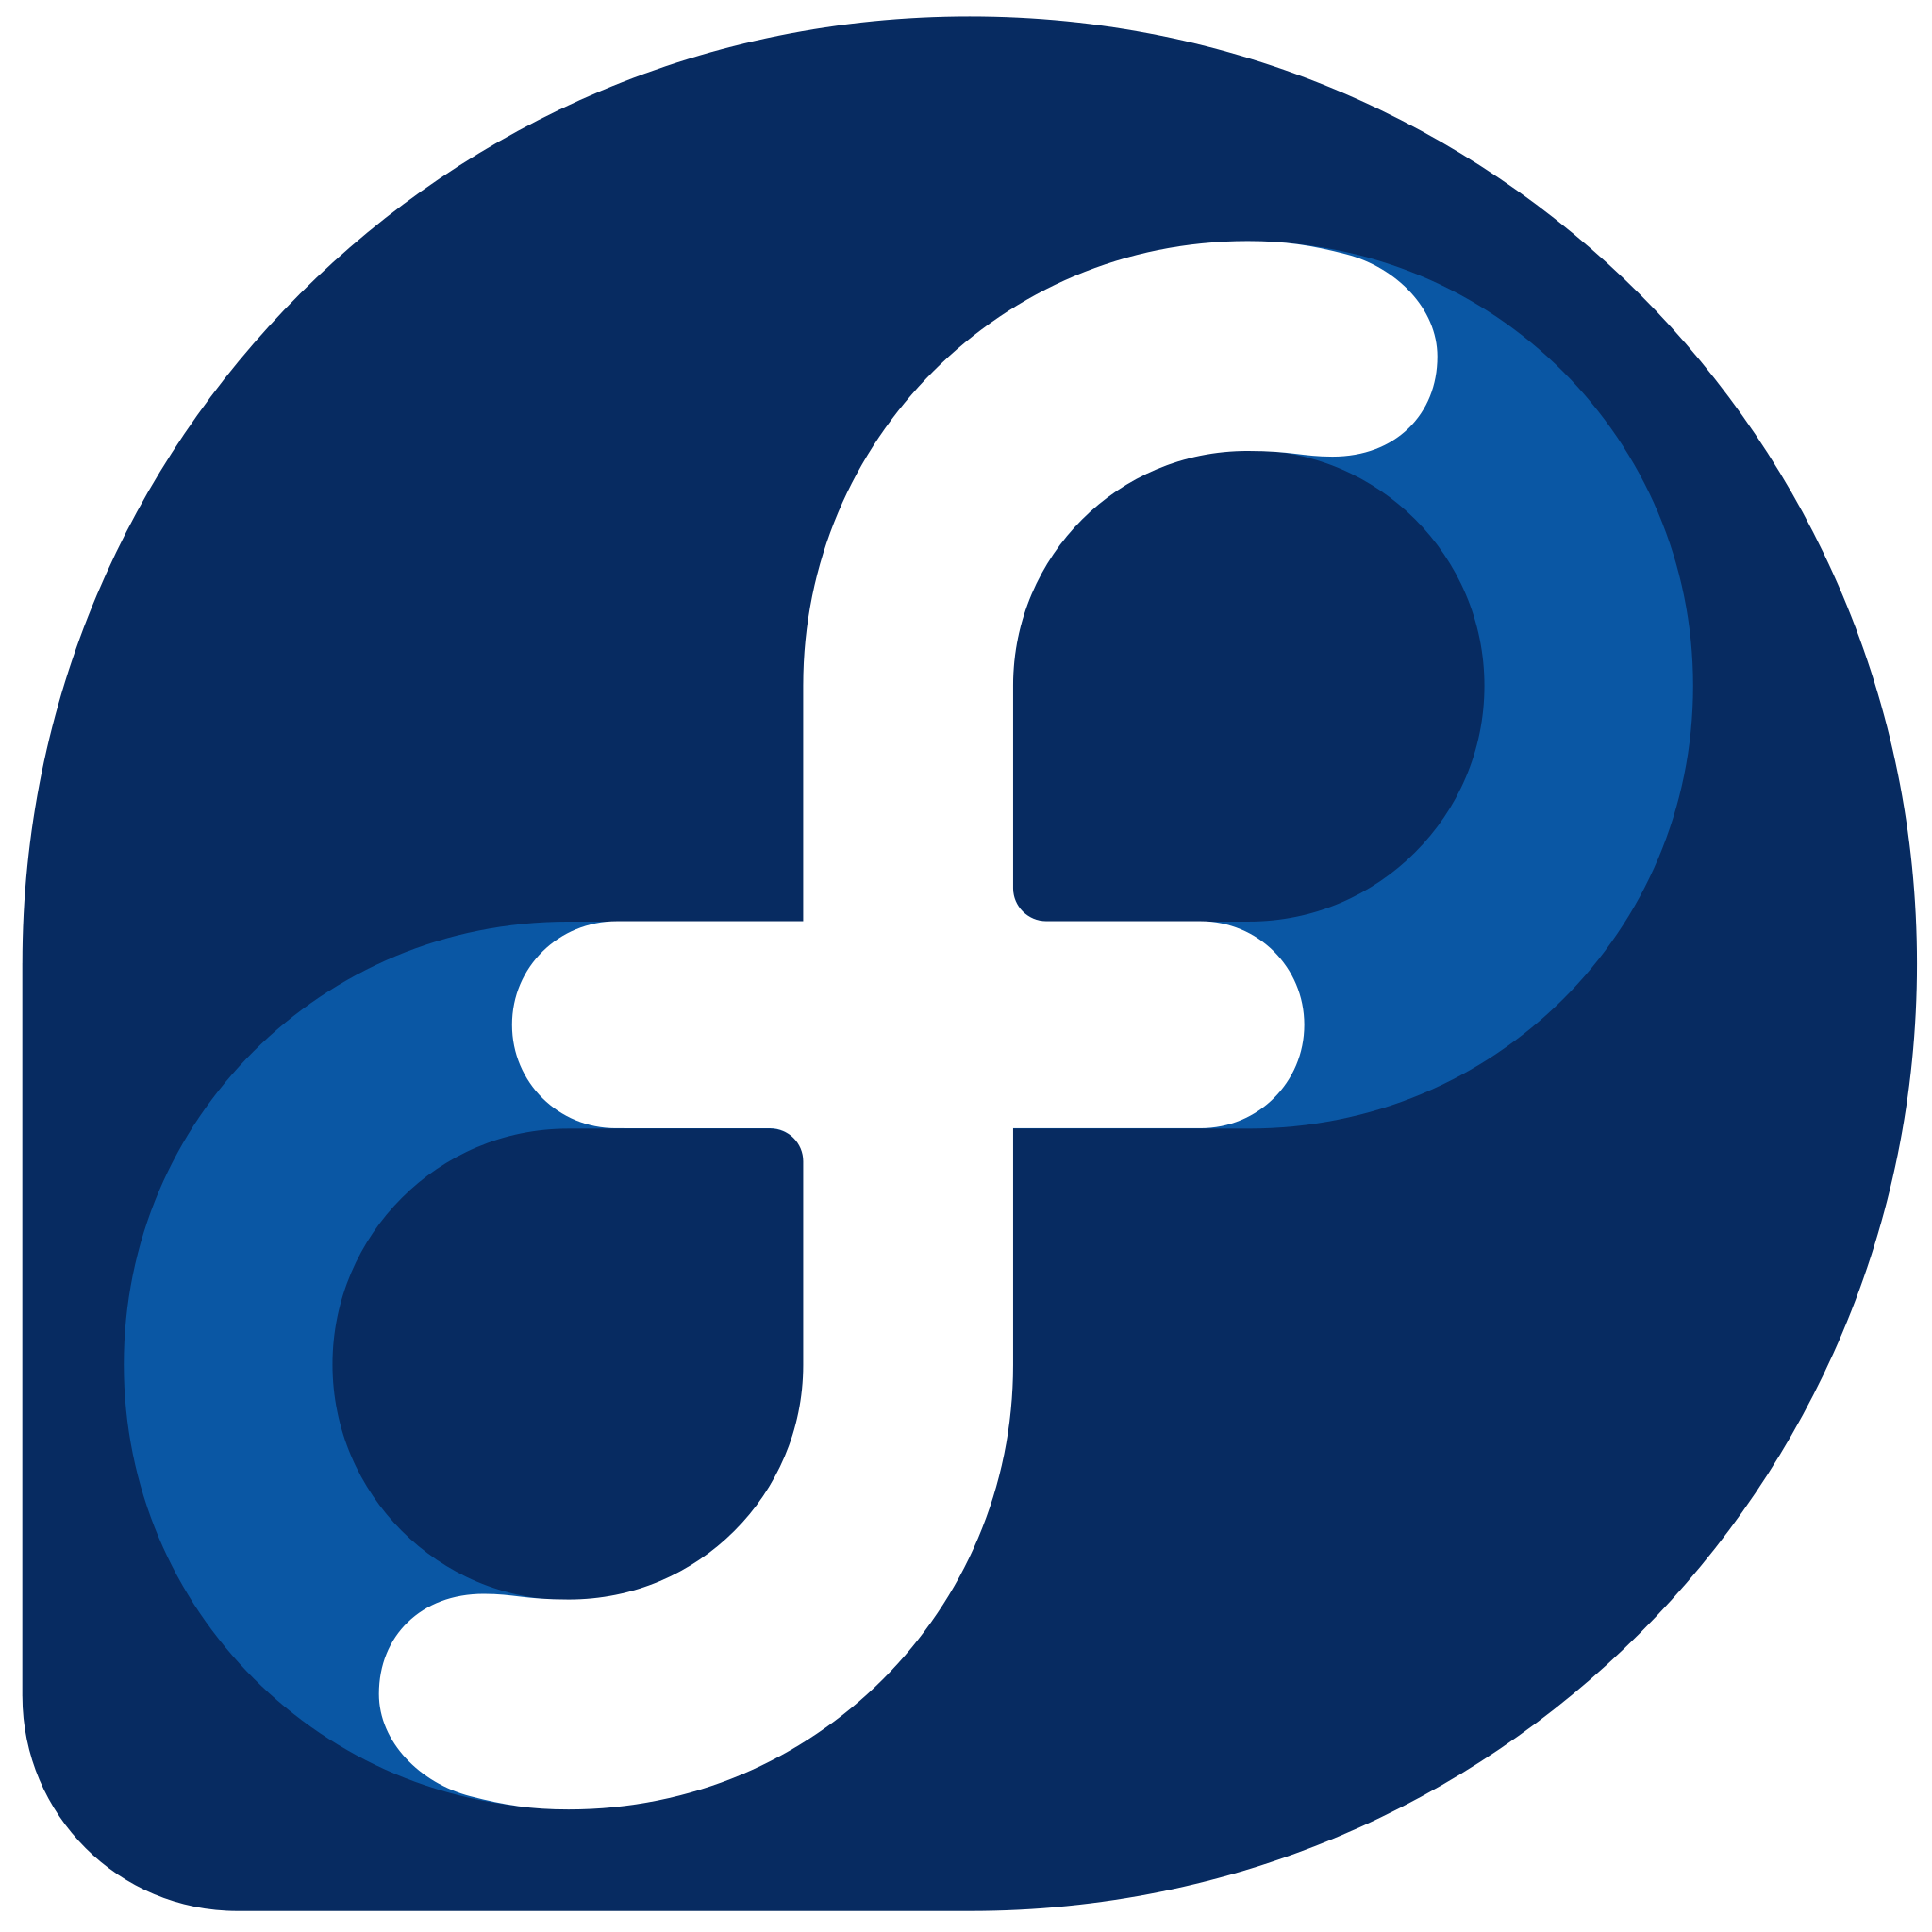 Fedora Linux Icon